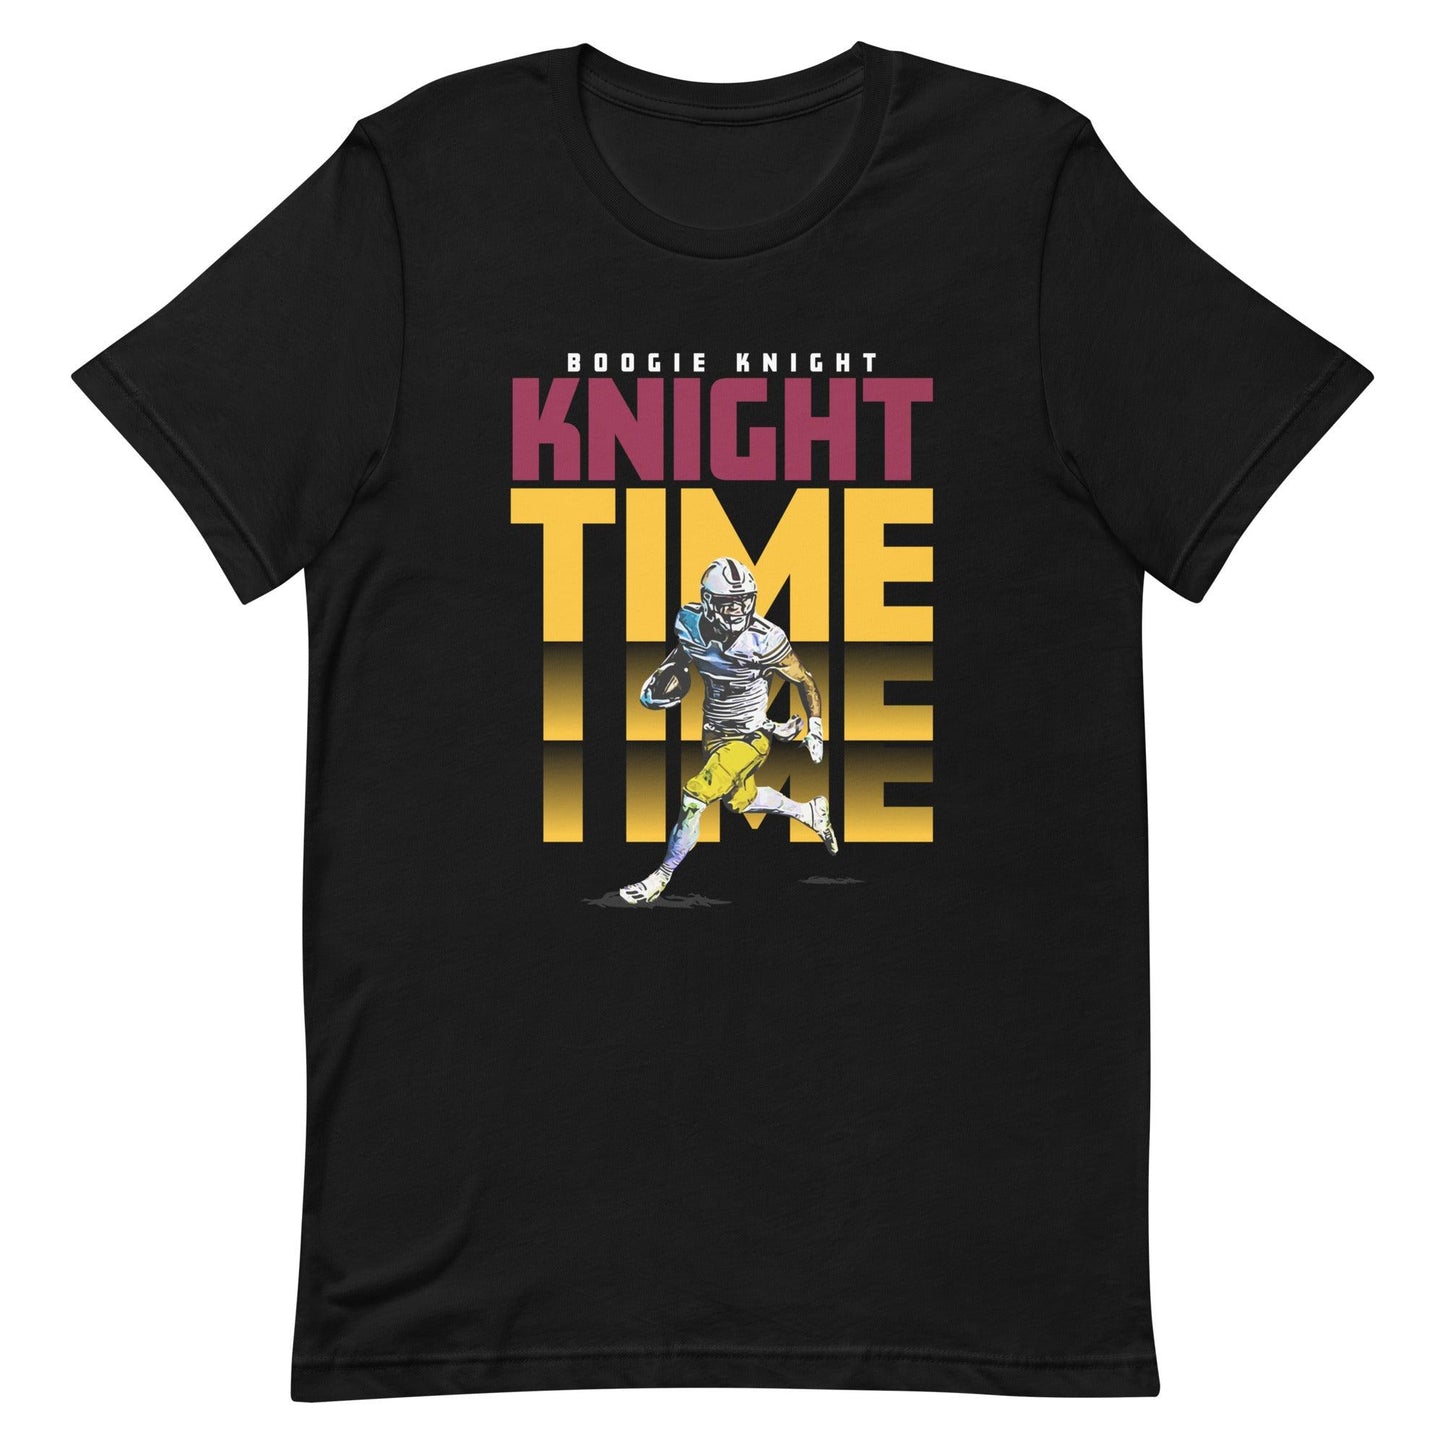 Boogie Knight "Night Time" t-shirt - Fan Arch